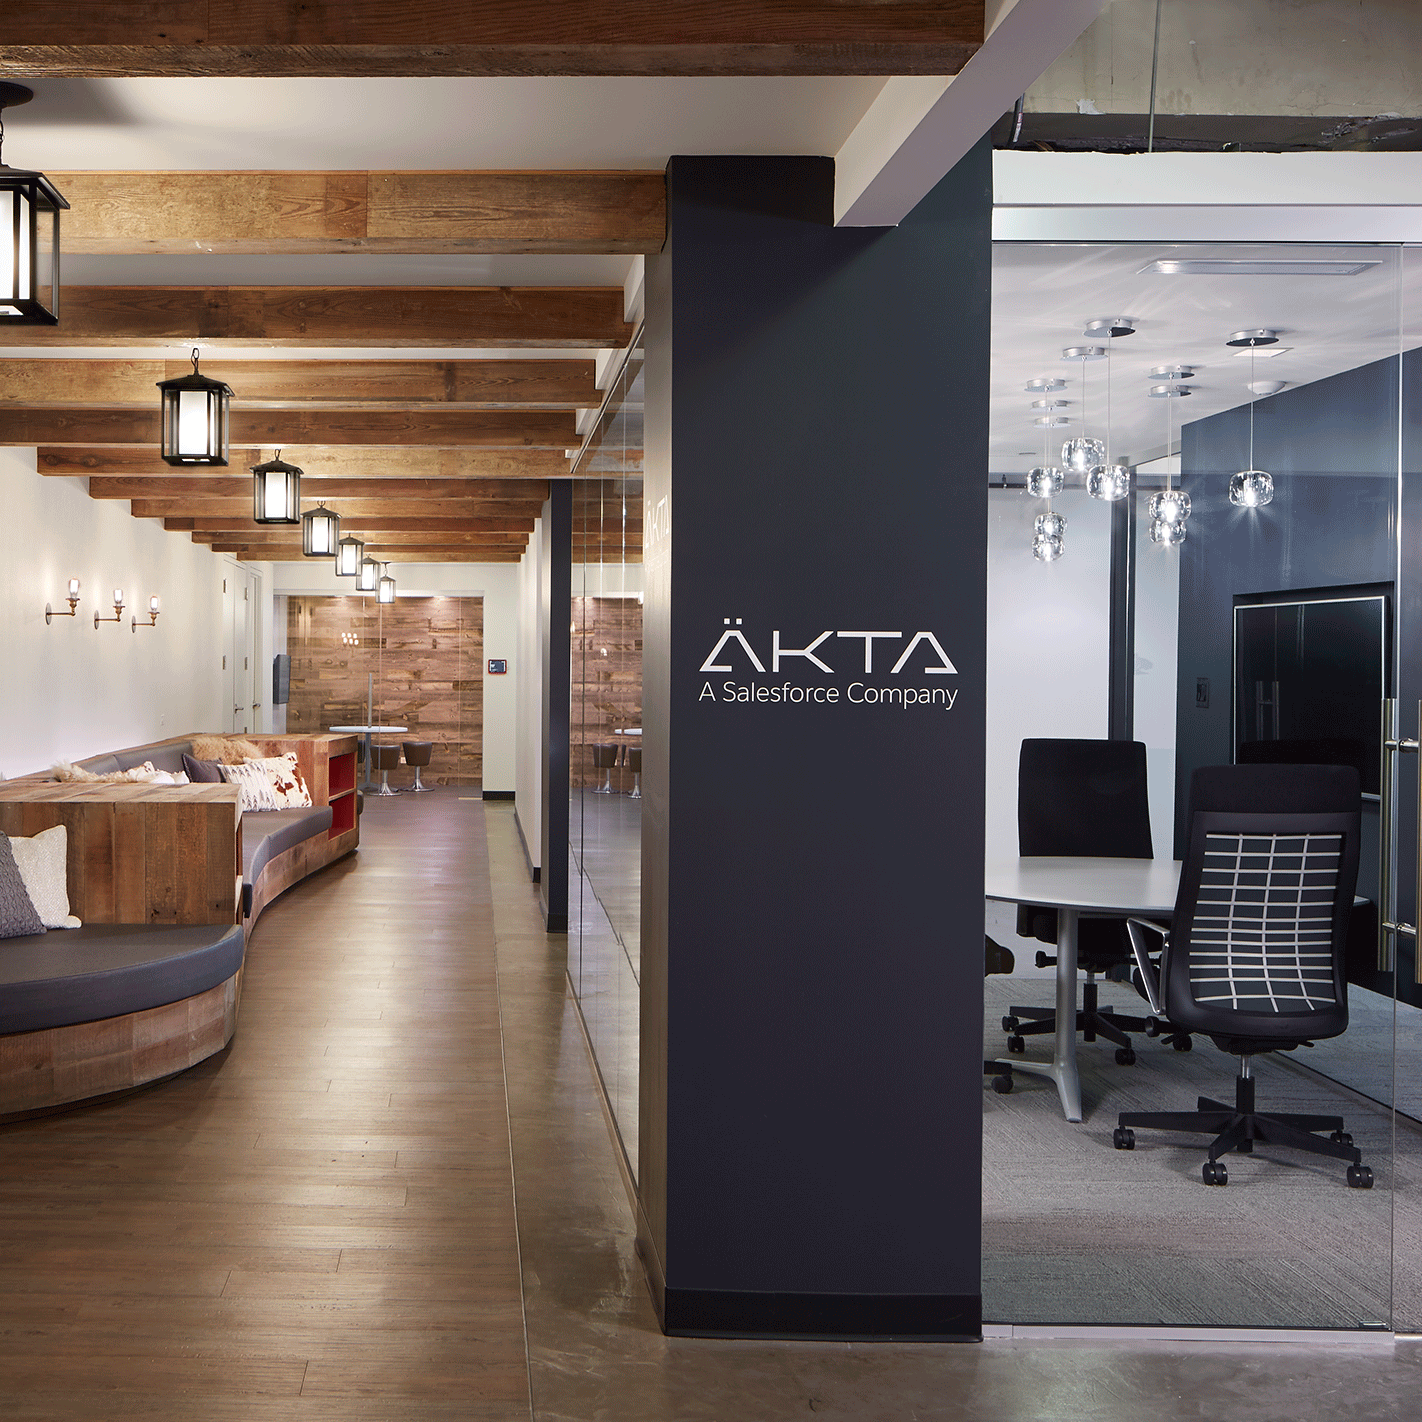 AKTA (A Salesforce Company)